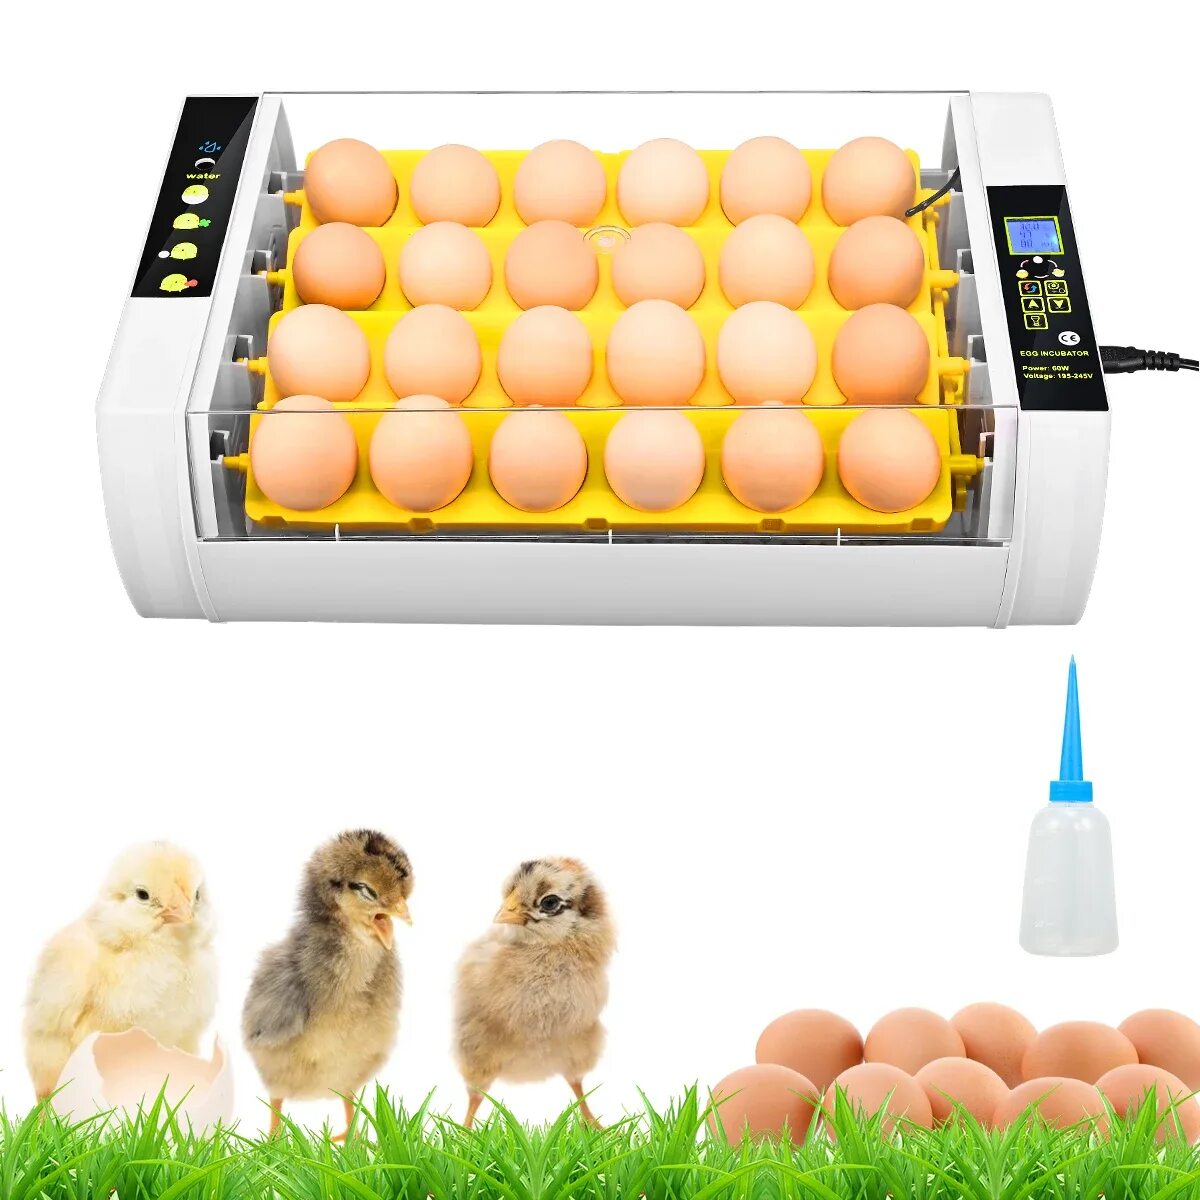 Домашний инкубатор автоматический. Инкубатор Egg incubator. Инкубатор для яиц Egg incubator QC Pass 04. Fully Automatic Egg incubator. Инкубатор для яиц fully Automatic Egg Incubato.